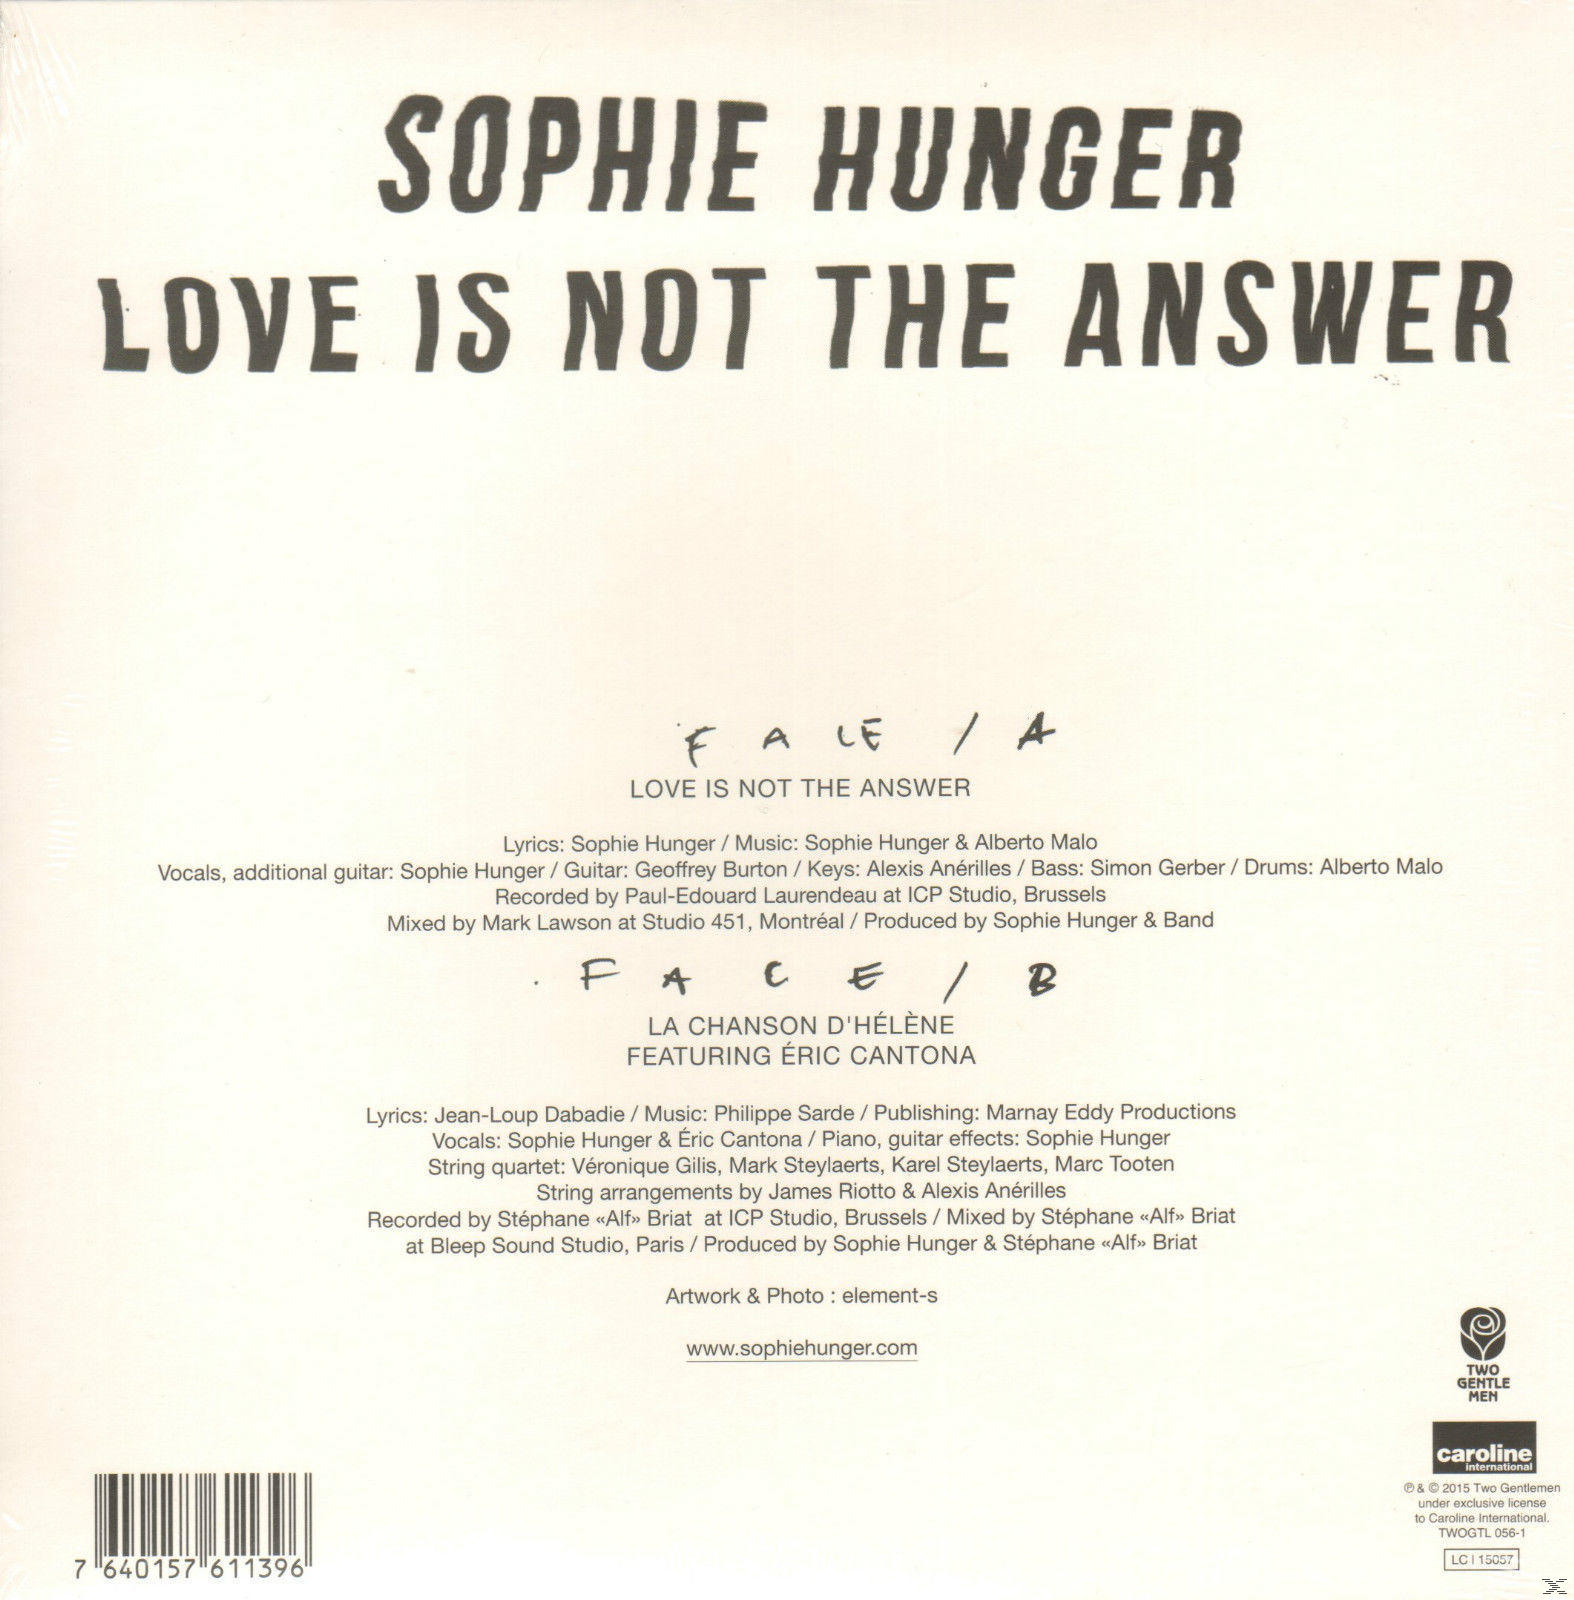 Love Isn\'t - Sophie - Hunger (Vinyl) Answer The